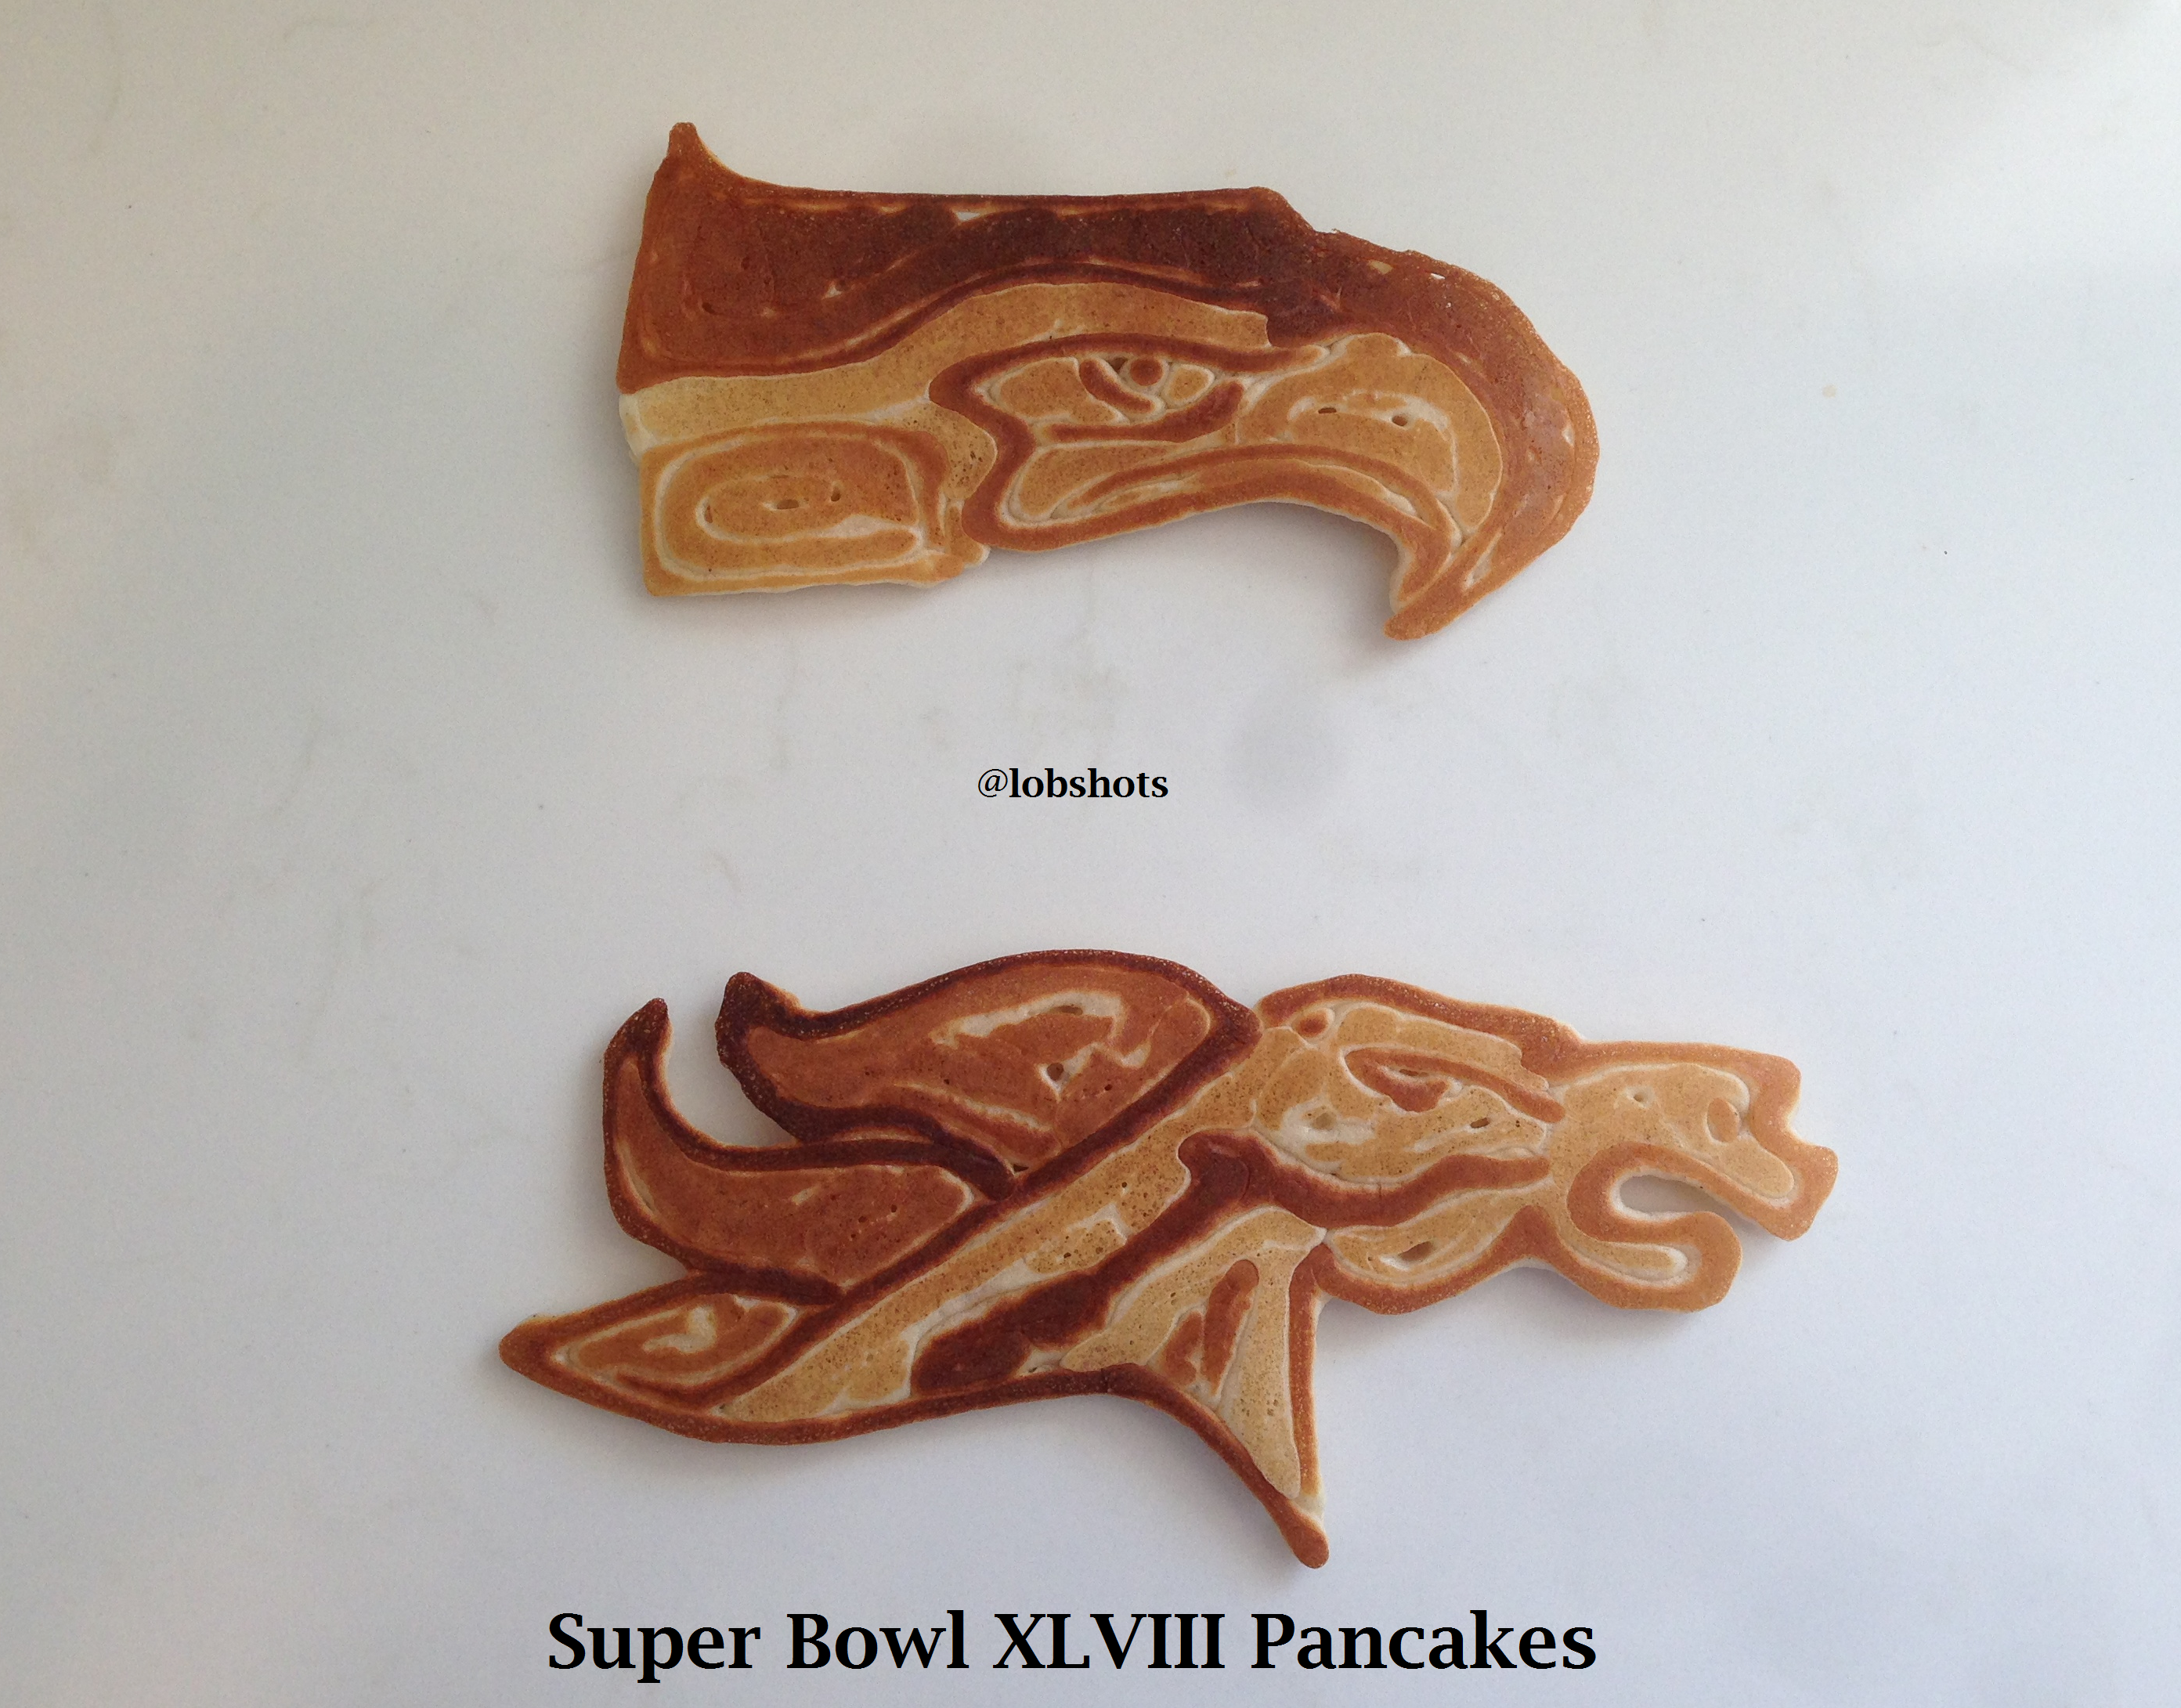 Super Bowl XLVIII Pancakes